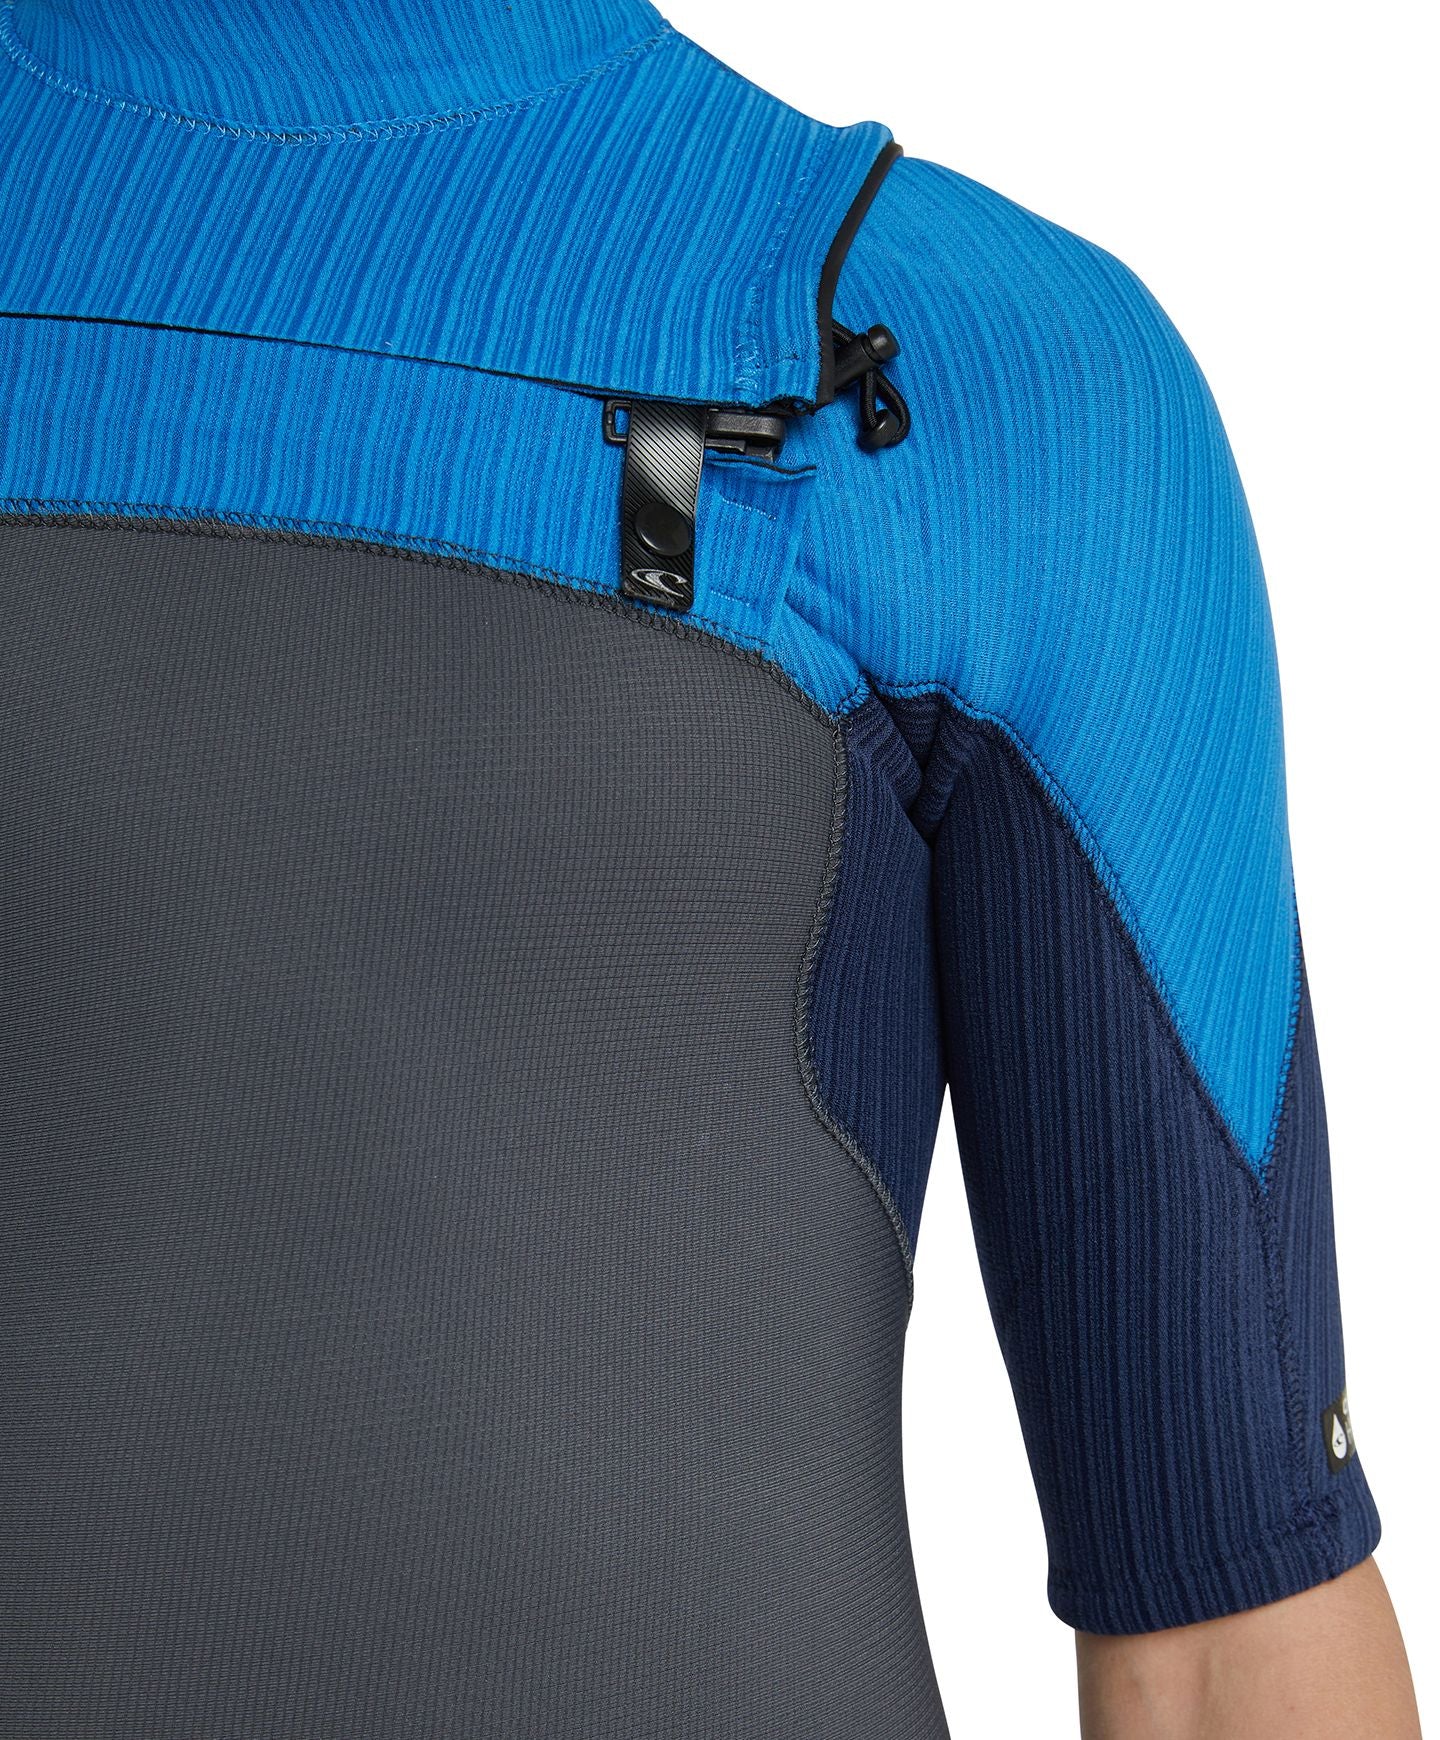 Boy's Hyperfreak 2mm Short Sleeve Springsuit Wetsuit - Graphite